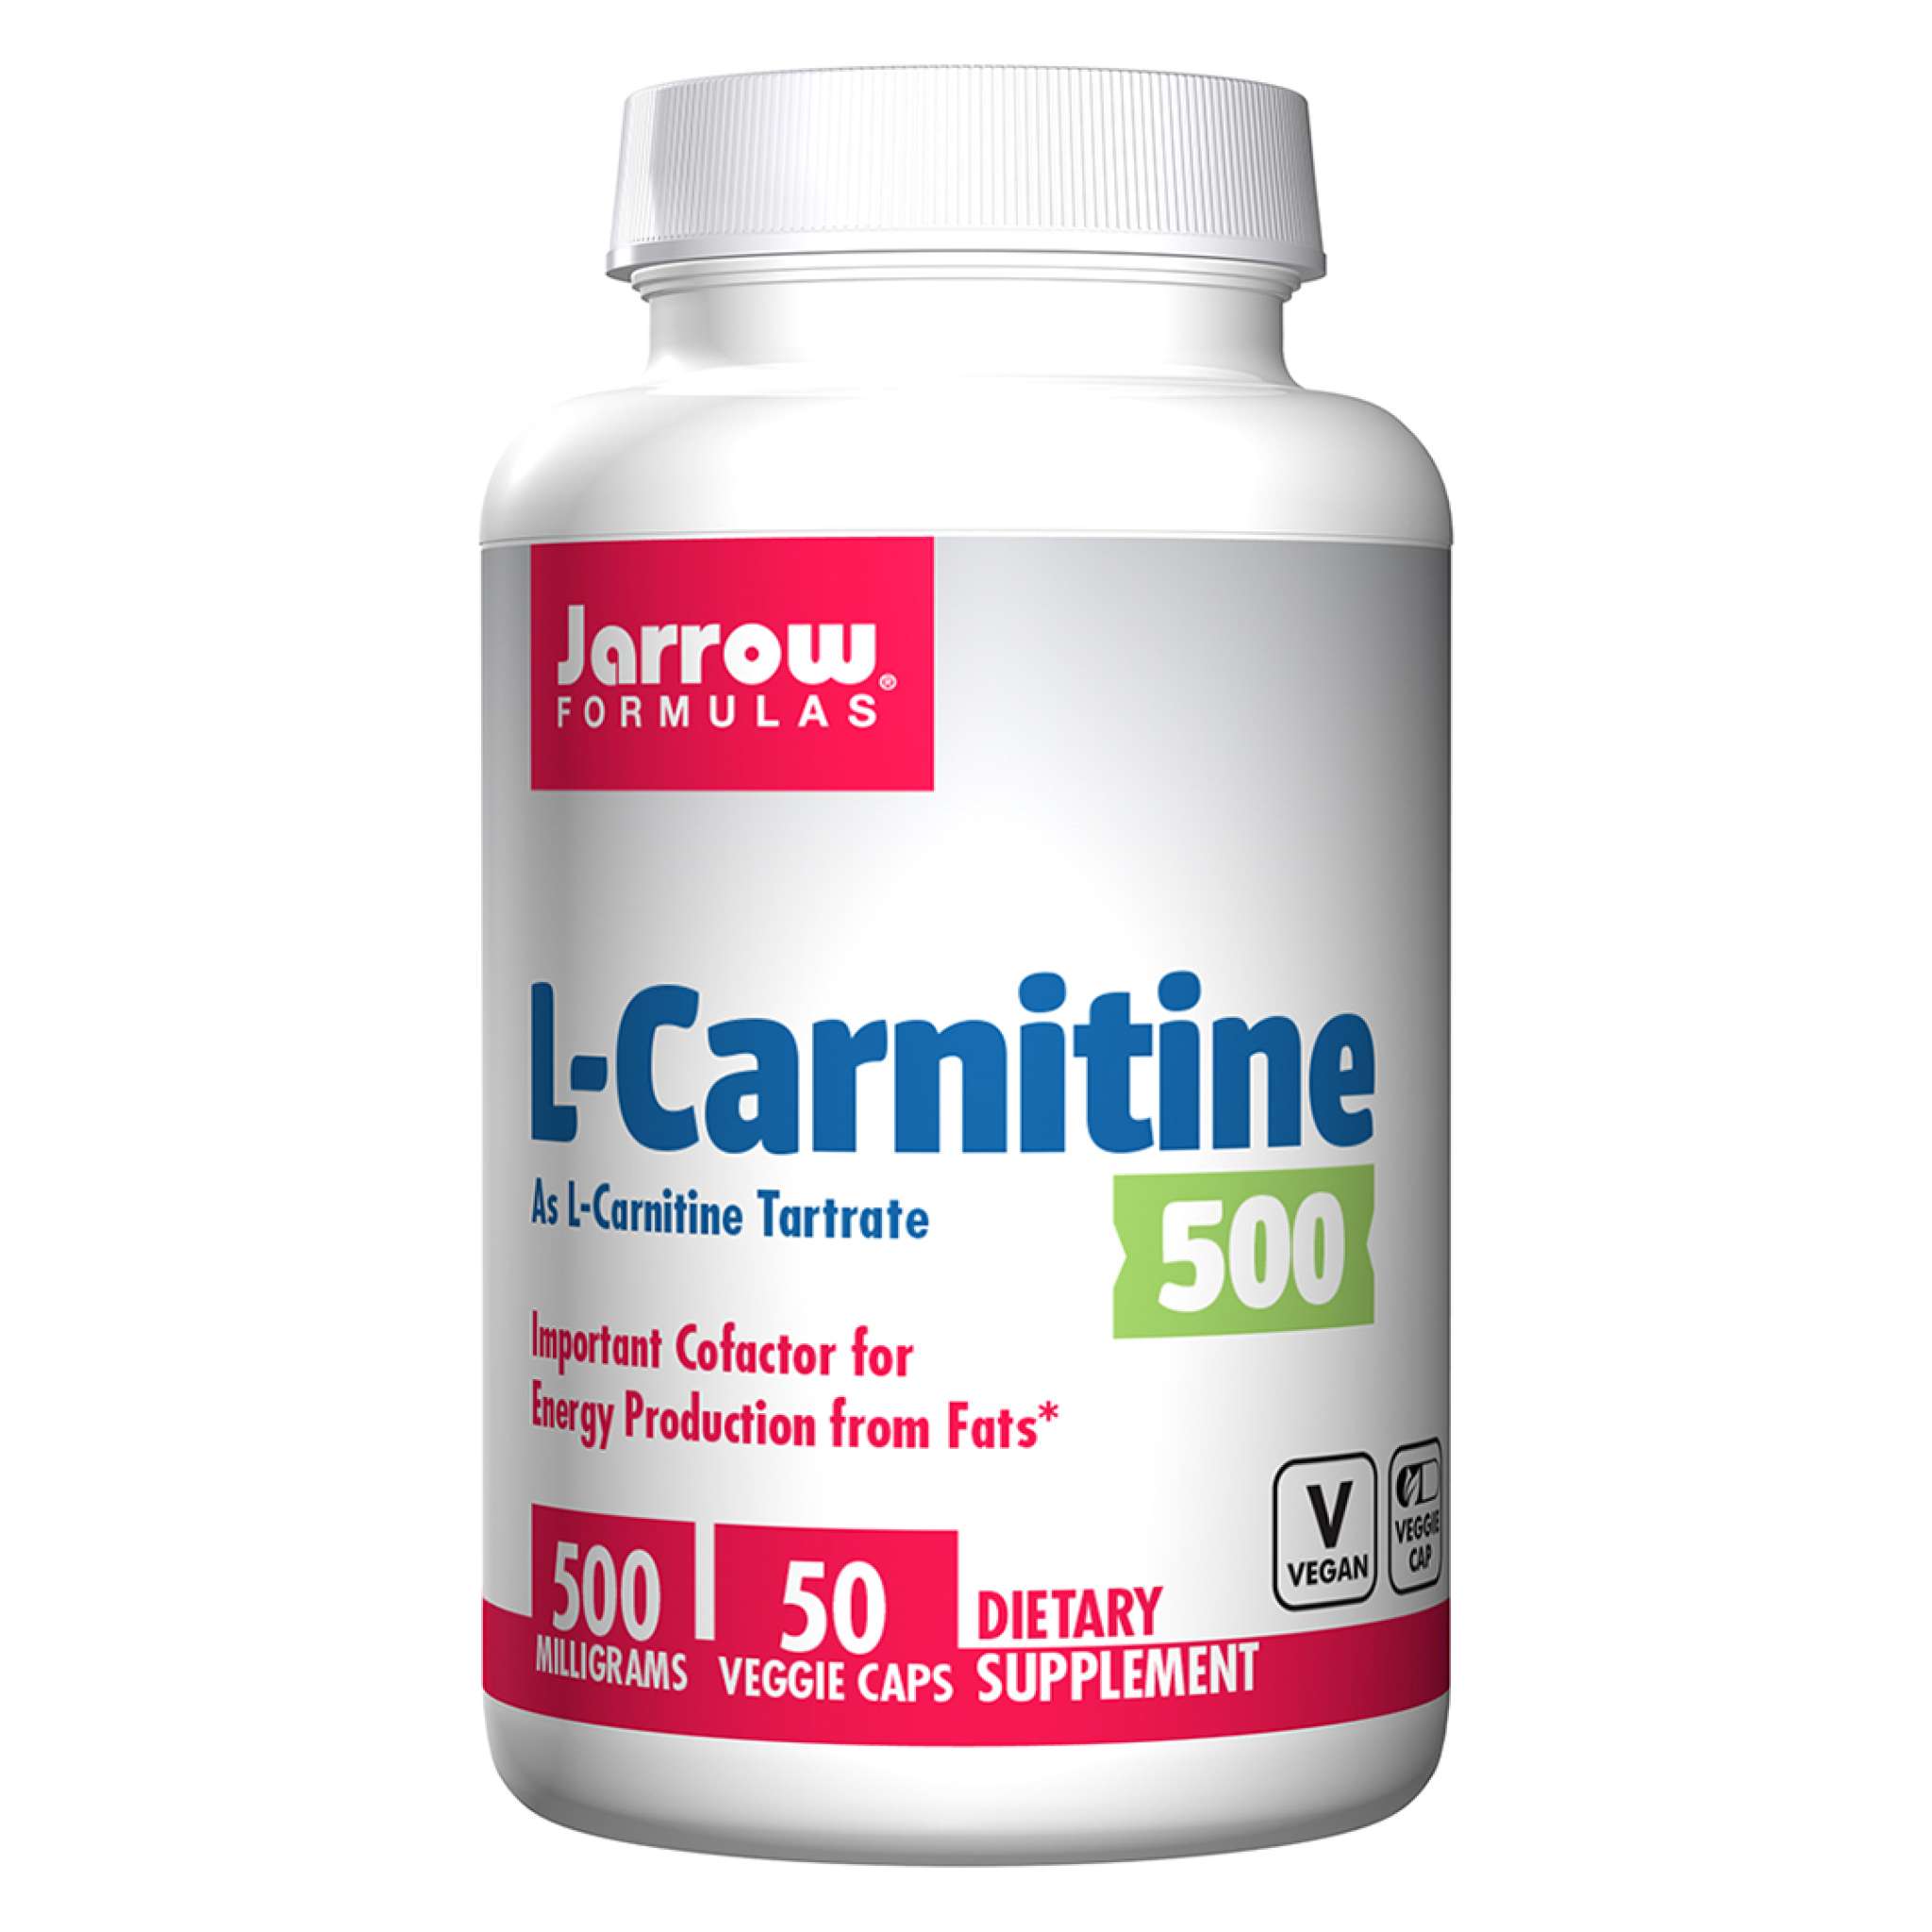 Jarrow Formulas - Carnitine 500 Tartrate